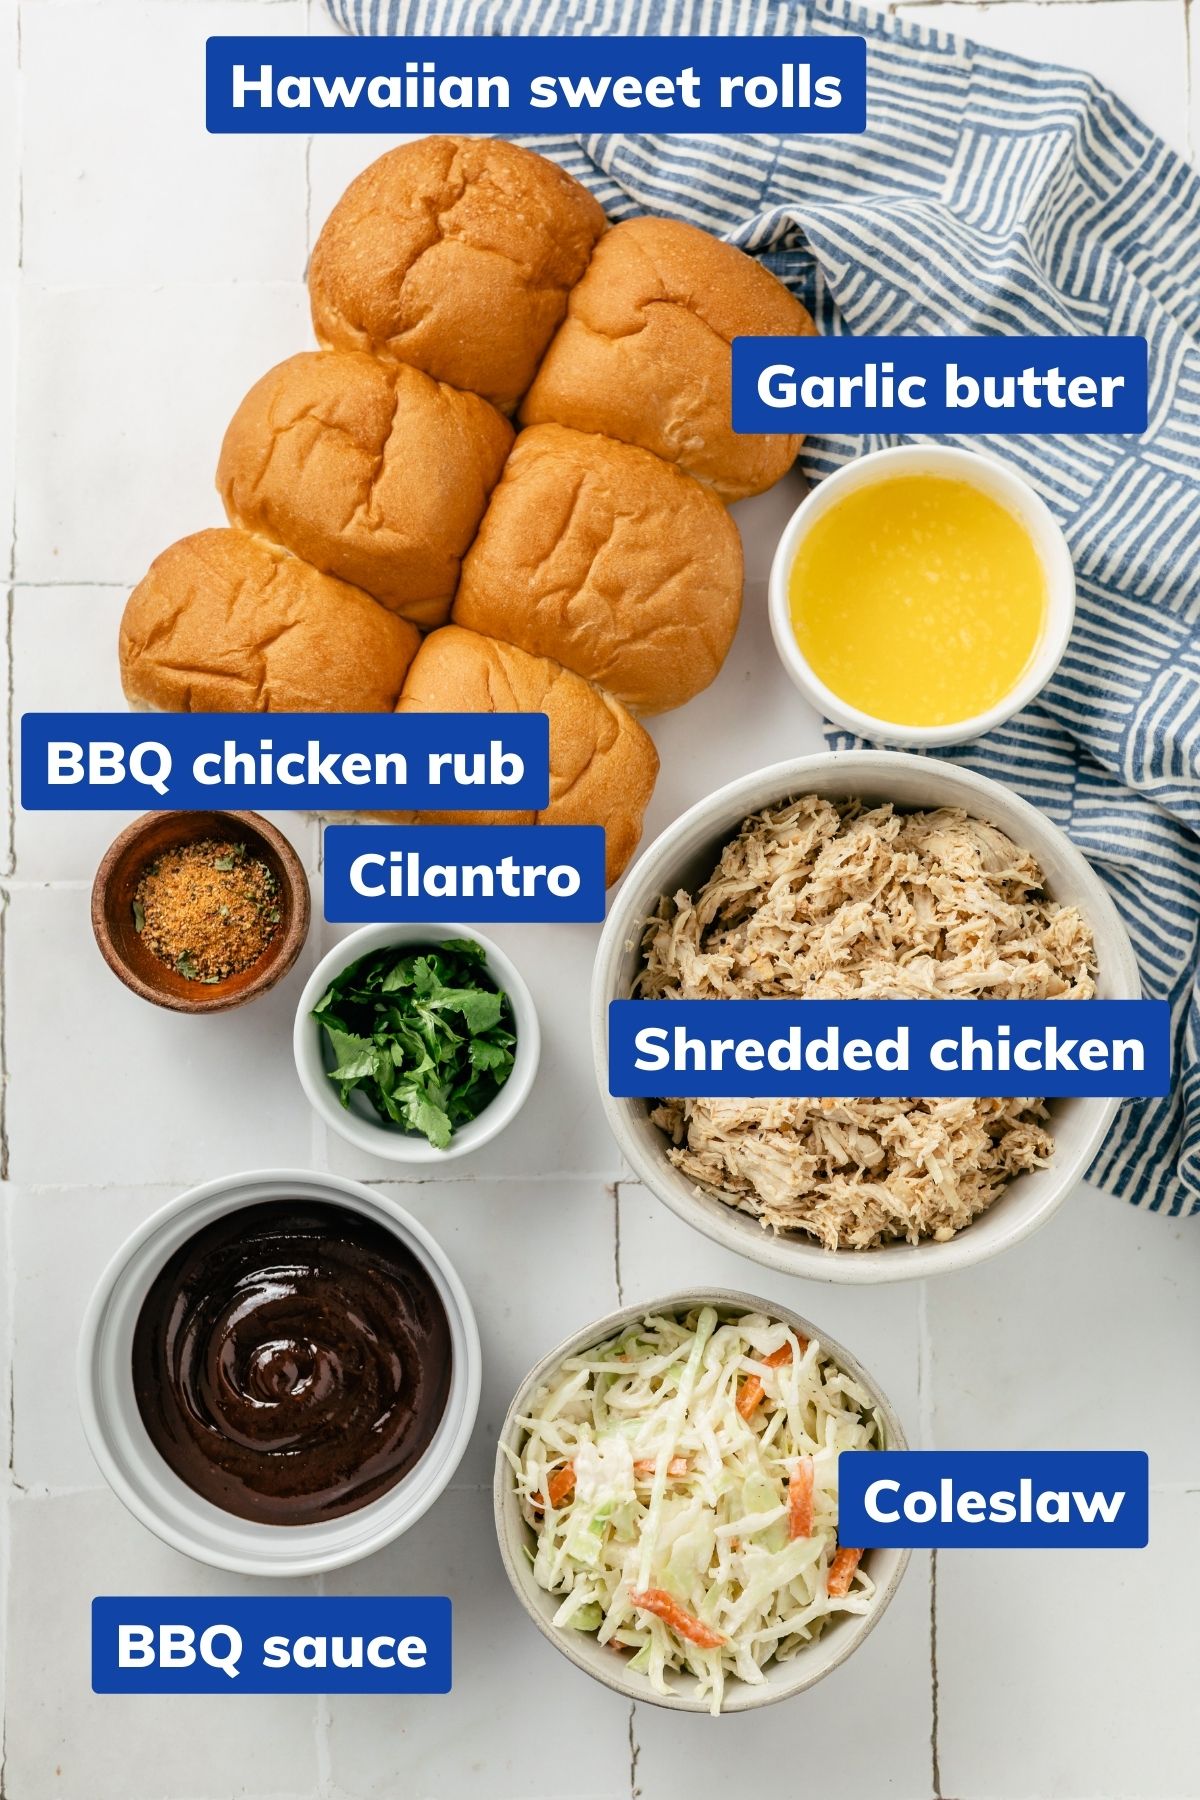 Bowls of ingredients for bbq chicken sliders: Sweet rolls, garlic butter, shredded chicken, BBQ chicken rub, BBQ sauce, coleslaw, and cilantro.